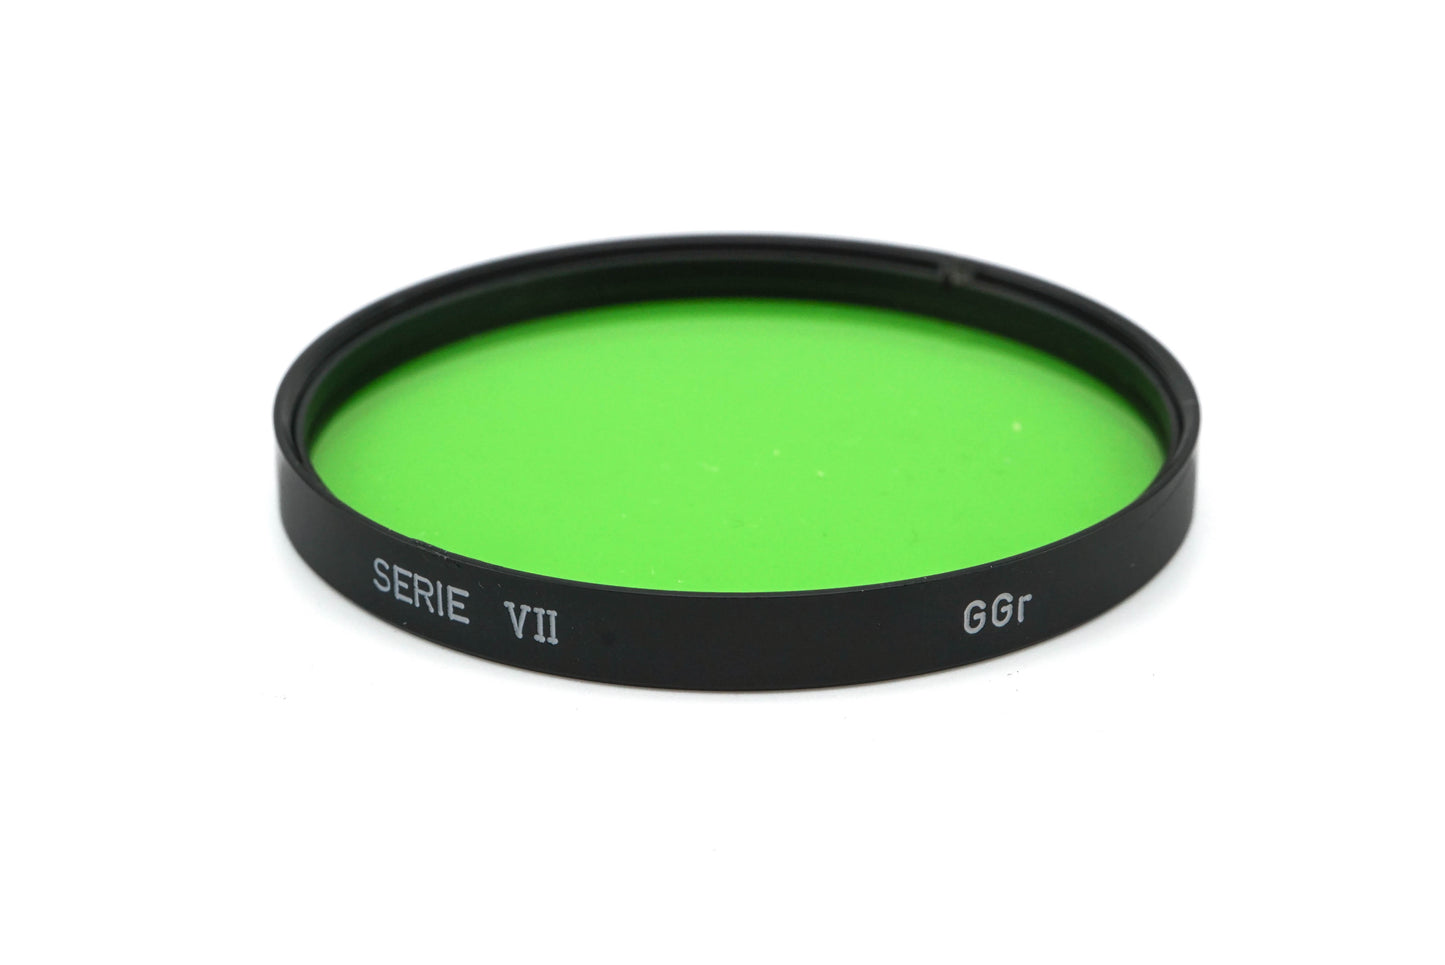 Leica Series VII Green Filter GGr